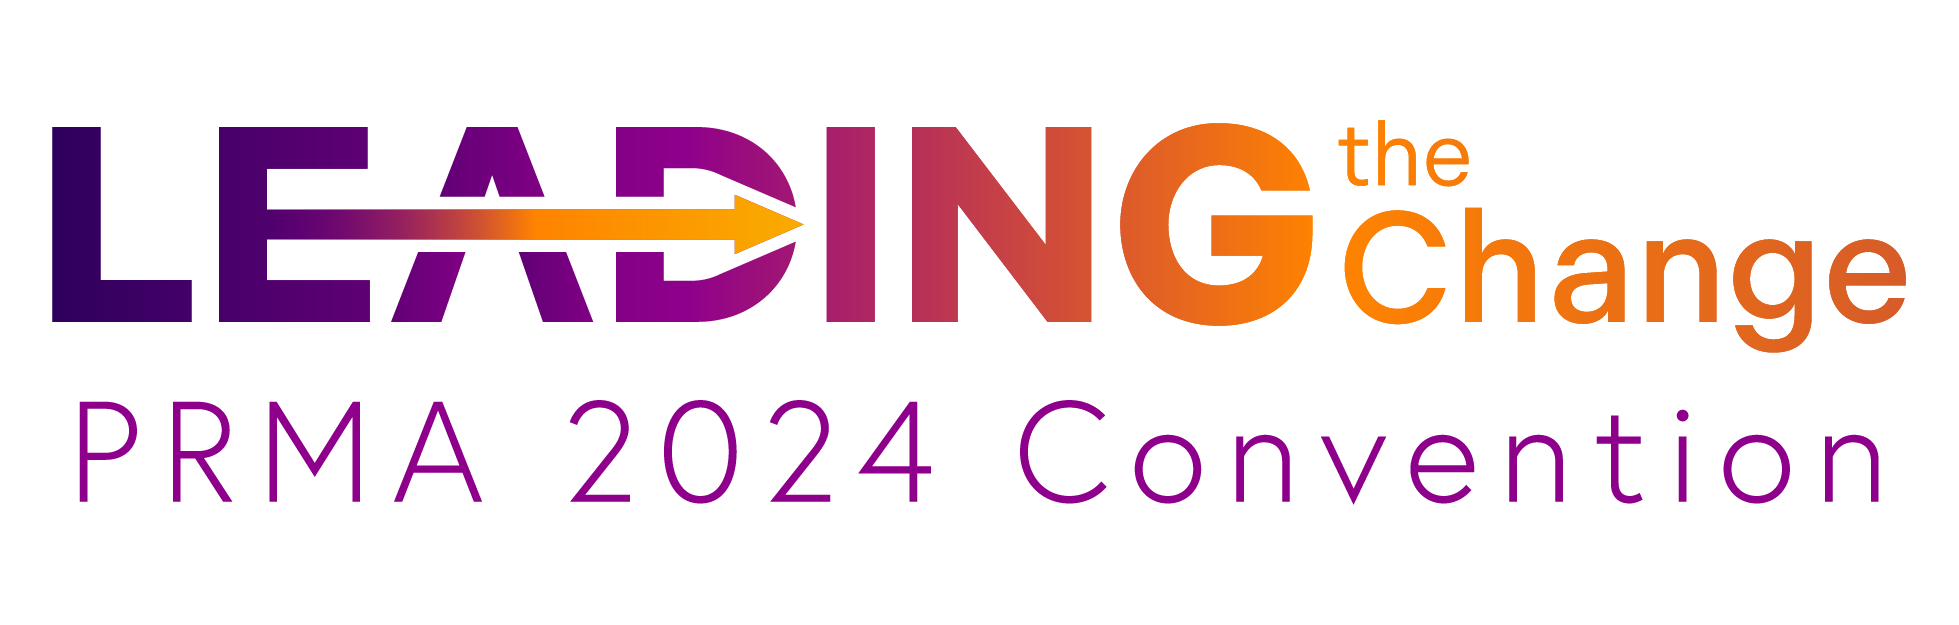 CONV 2024 Logo Webpage Header B-02